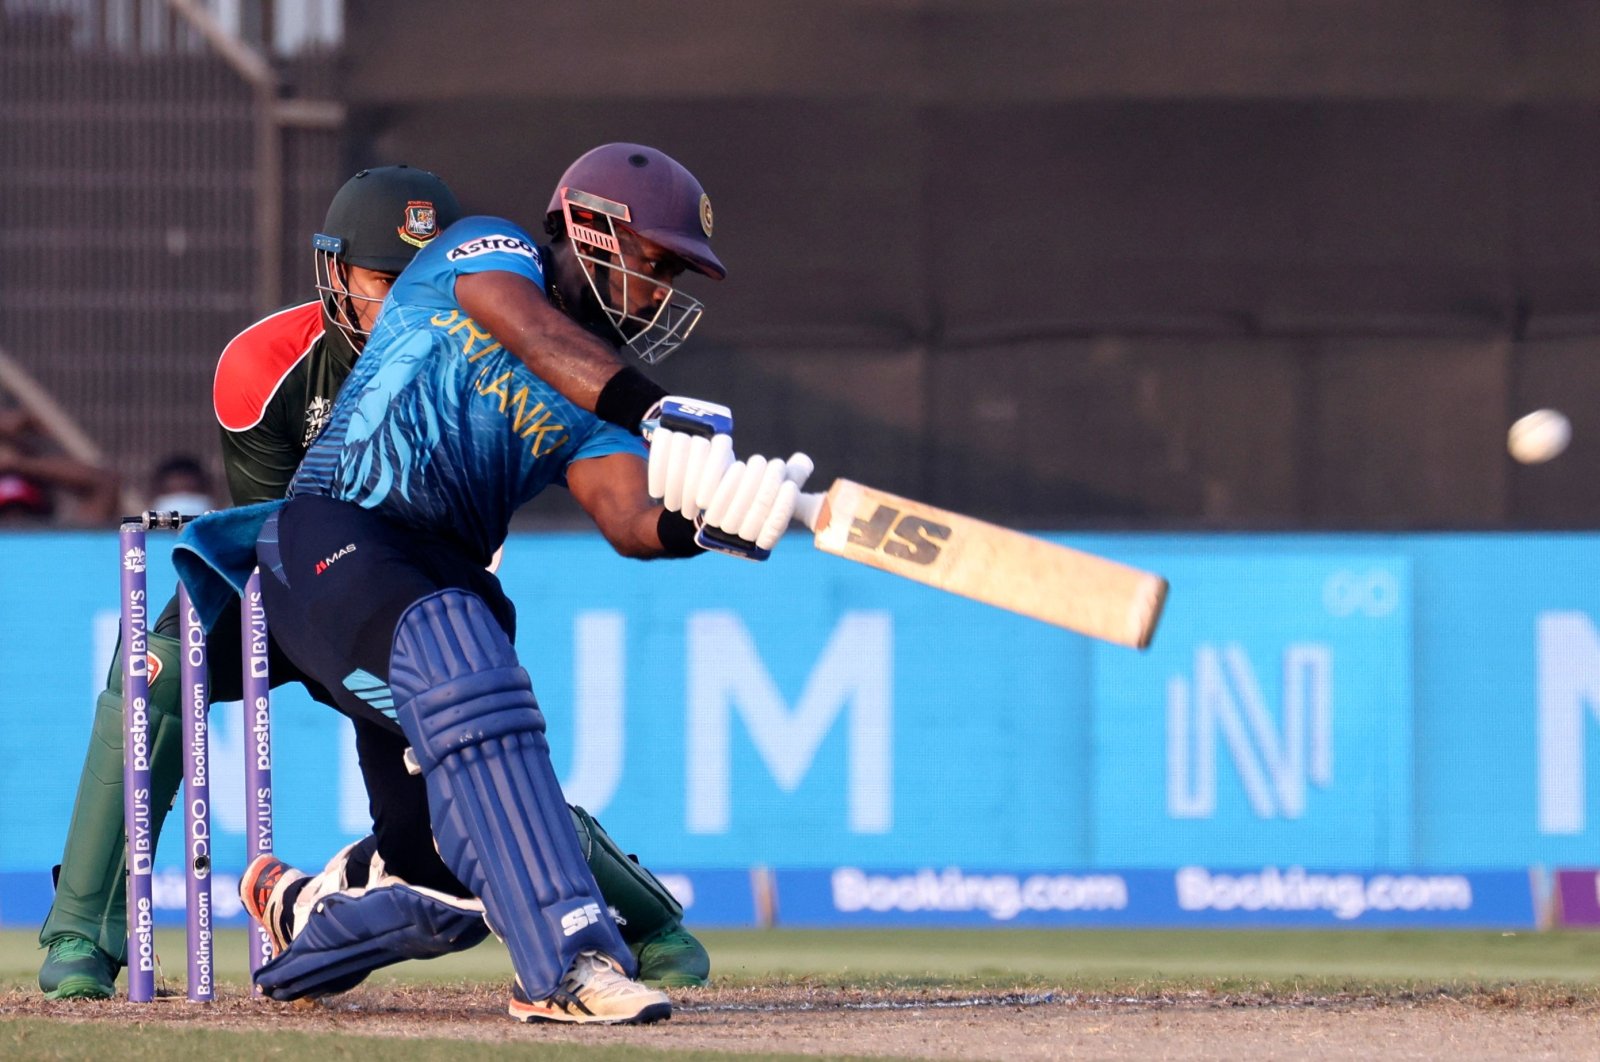 Sri Lanka's Charith Asalanka plays a shot during the ICC men's Twenty20 World Cup match against Bangladesh at the Sharjah Cricket Stadium in Sharjah, United Arab Emirates, Oct. 24, 2021. (AFP Photo)